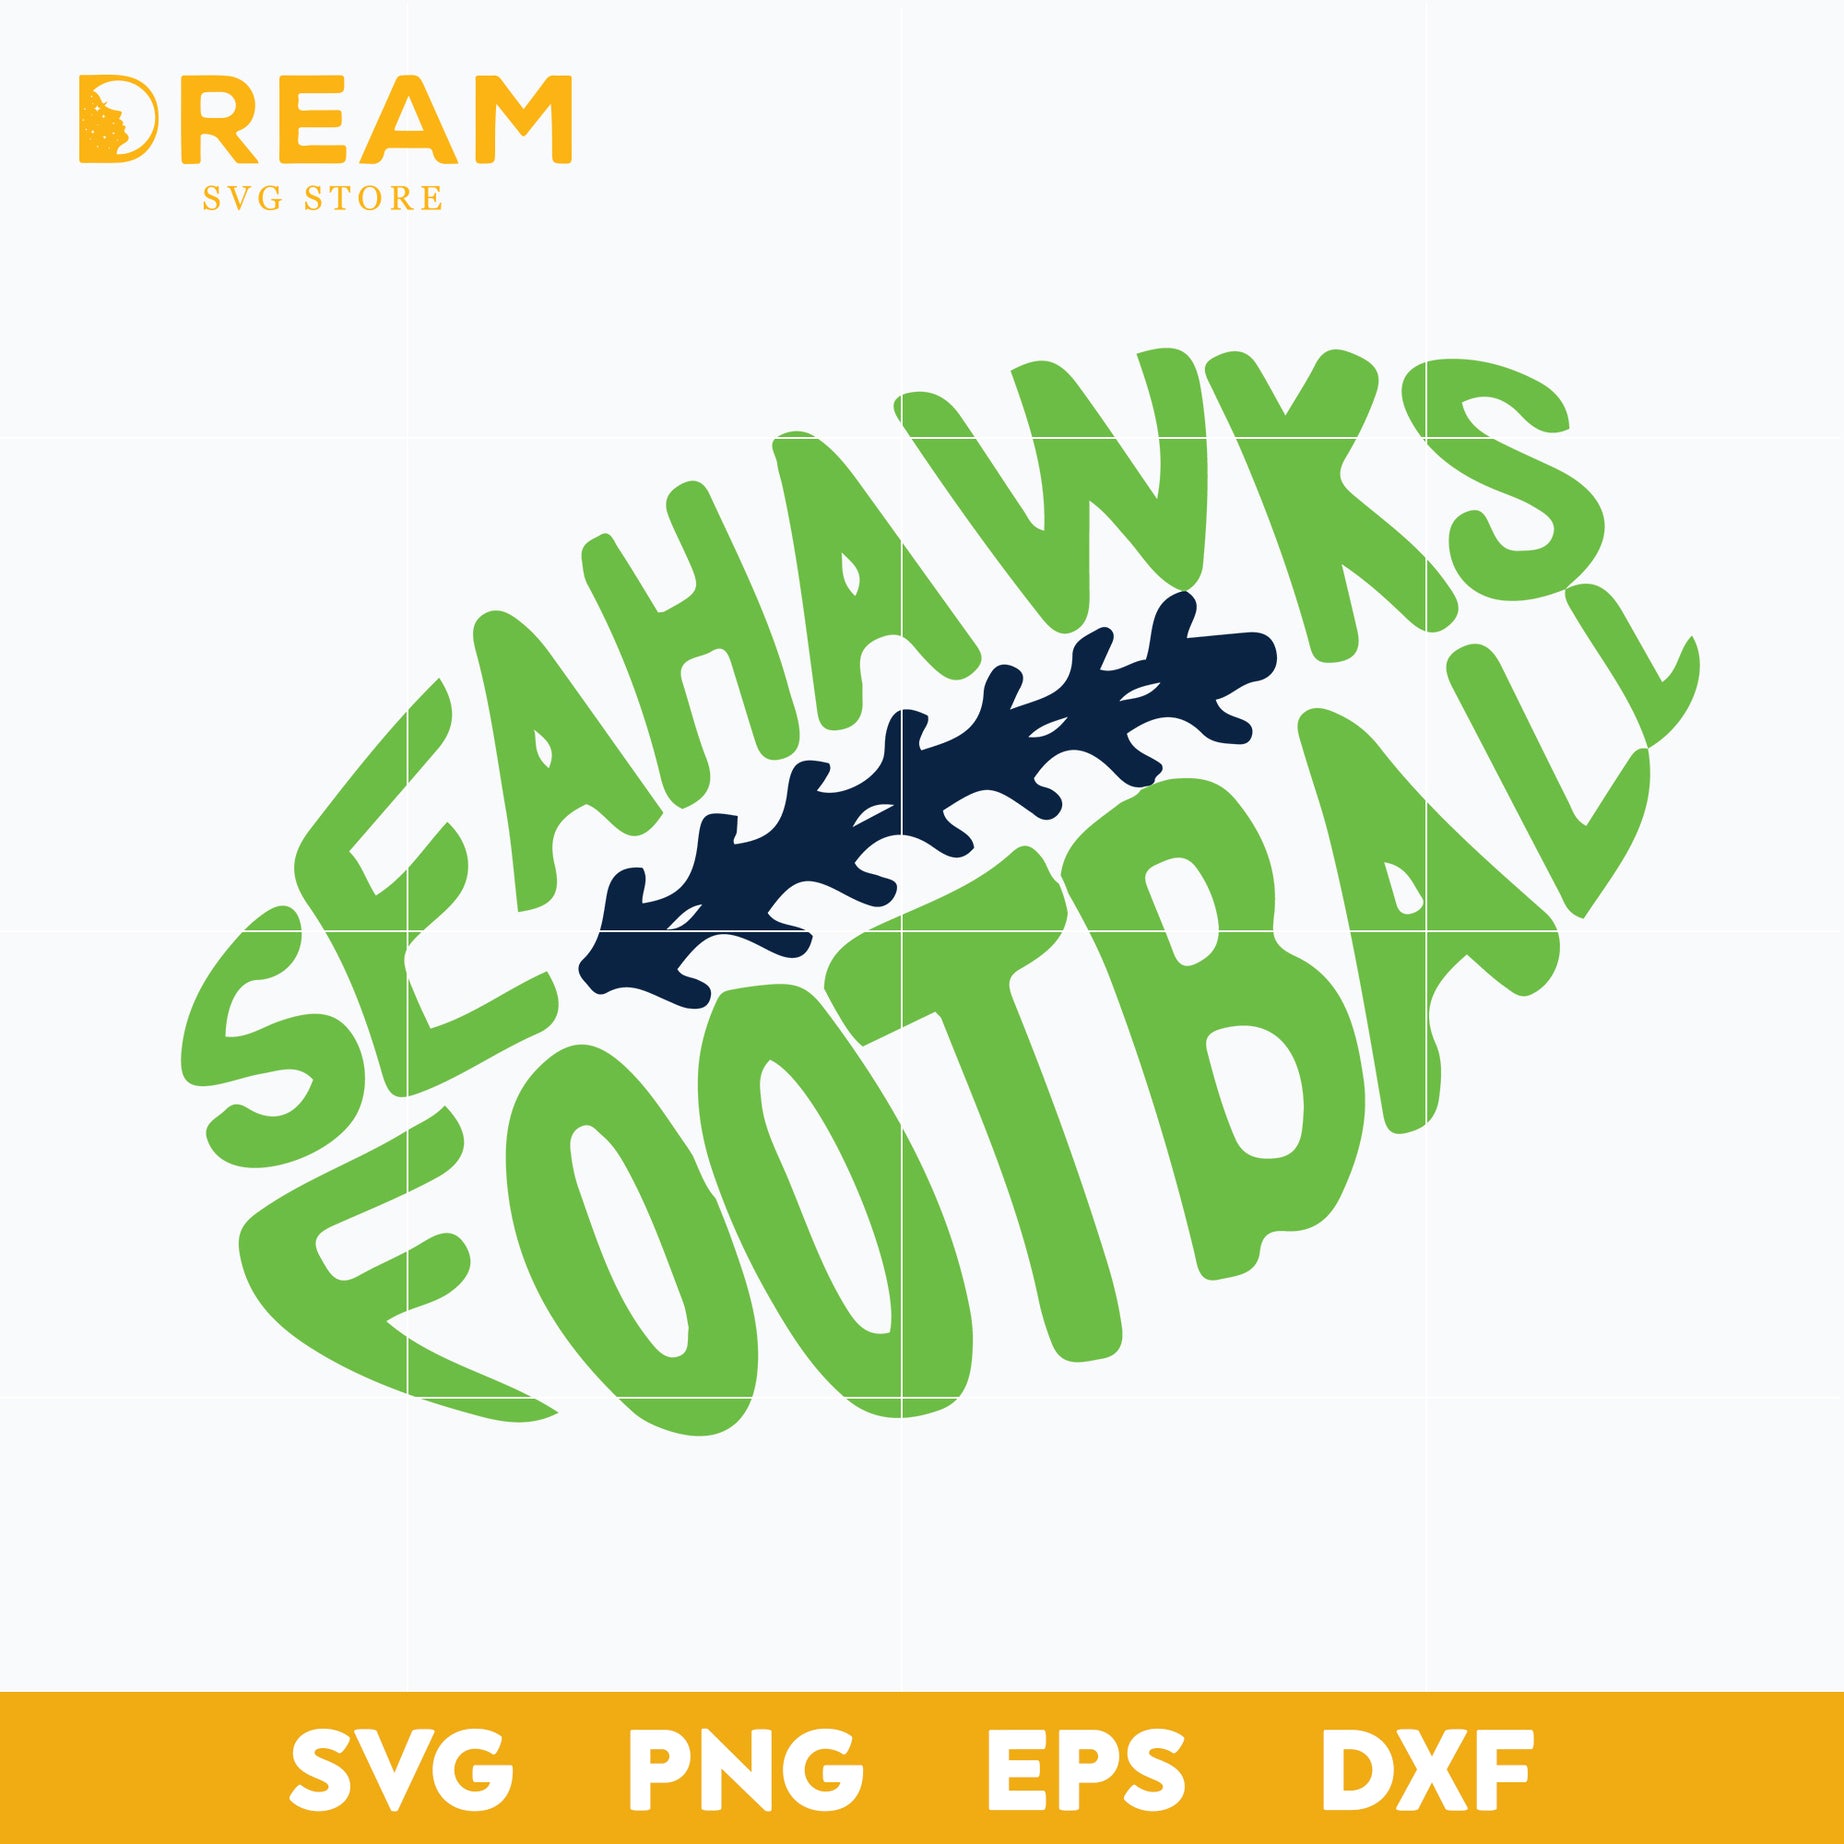 Seahawks football svg, Seattle Seahawks heart svg, seahawks heart svg, Nfl svg, png, dxf, eps digital file NFL1610208L